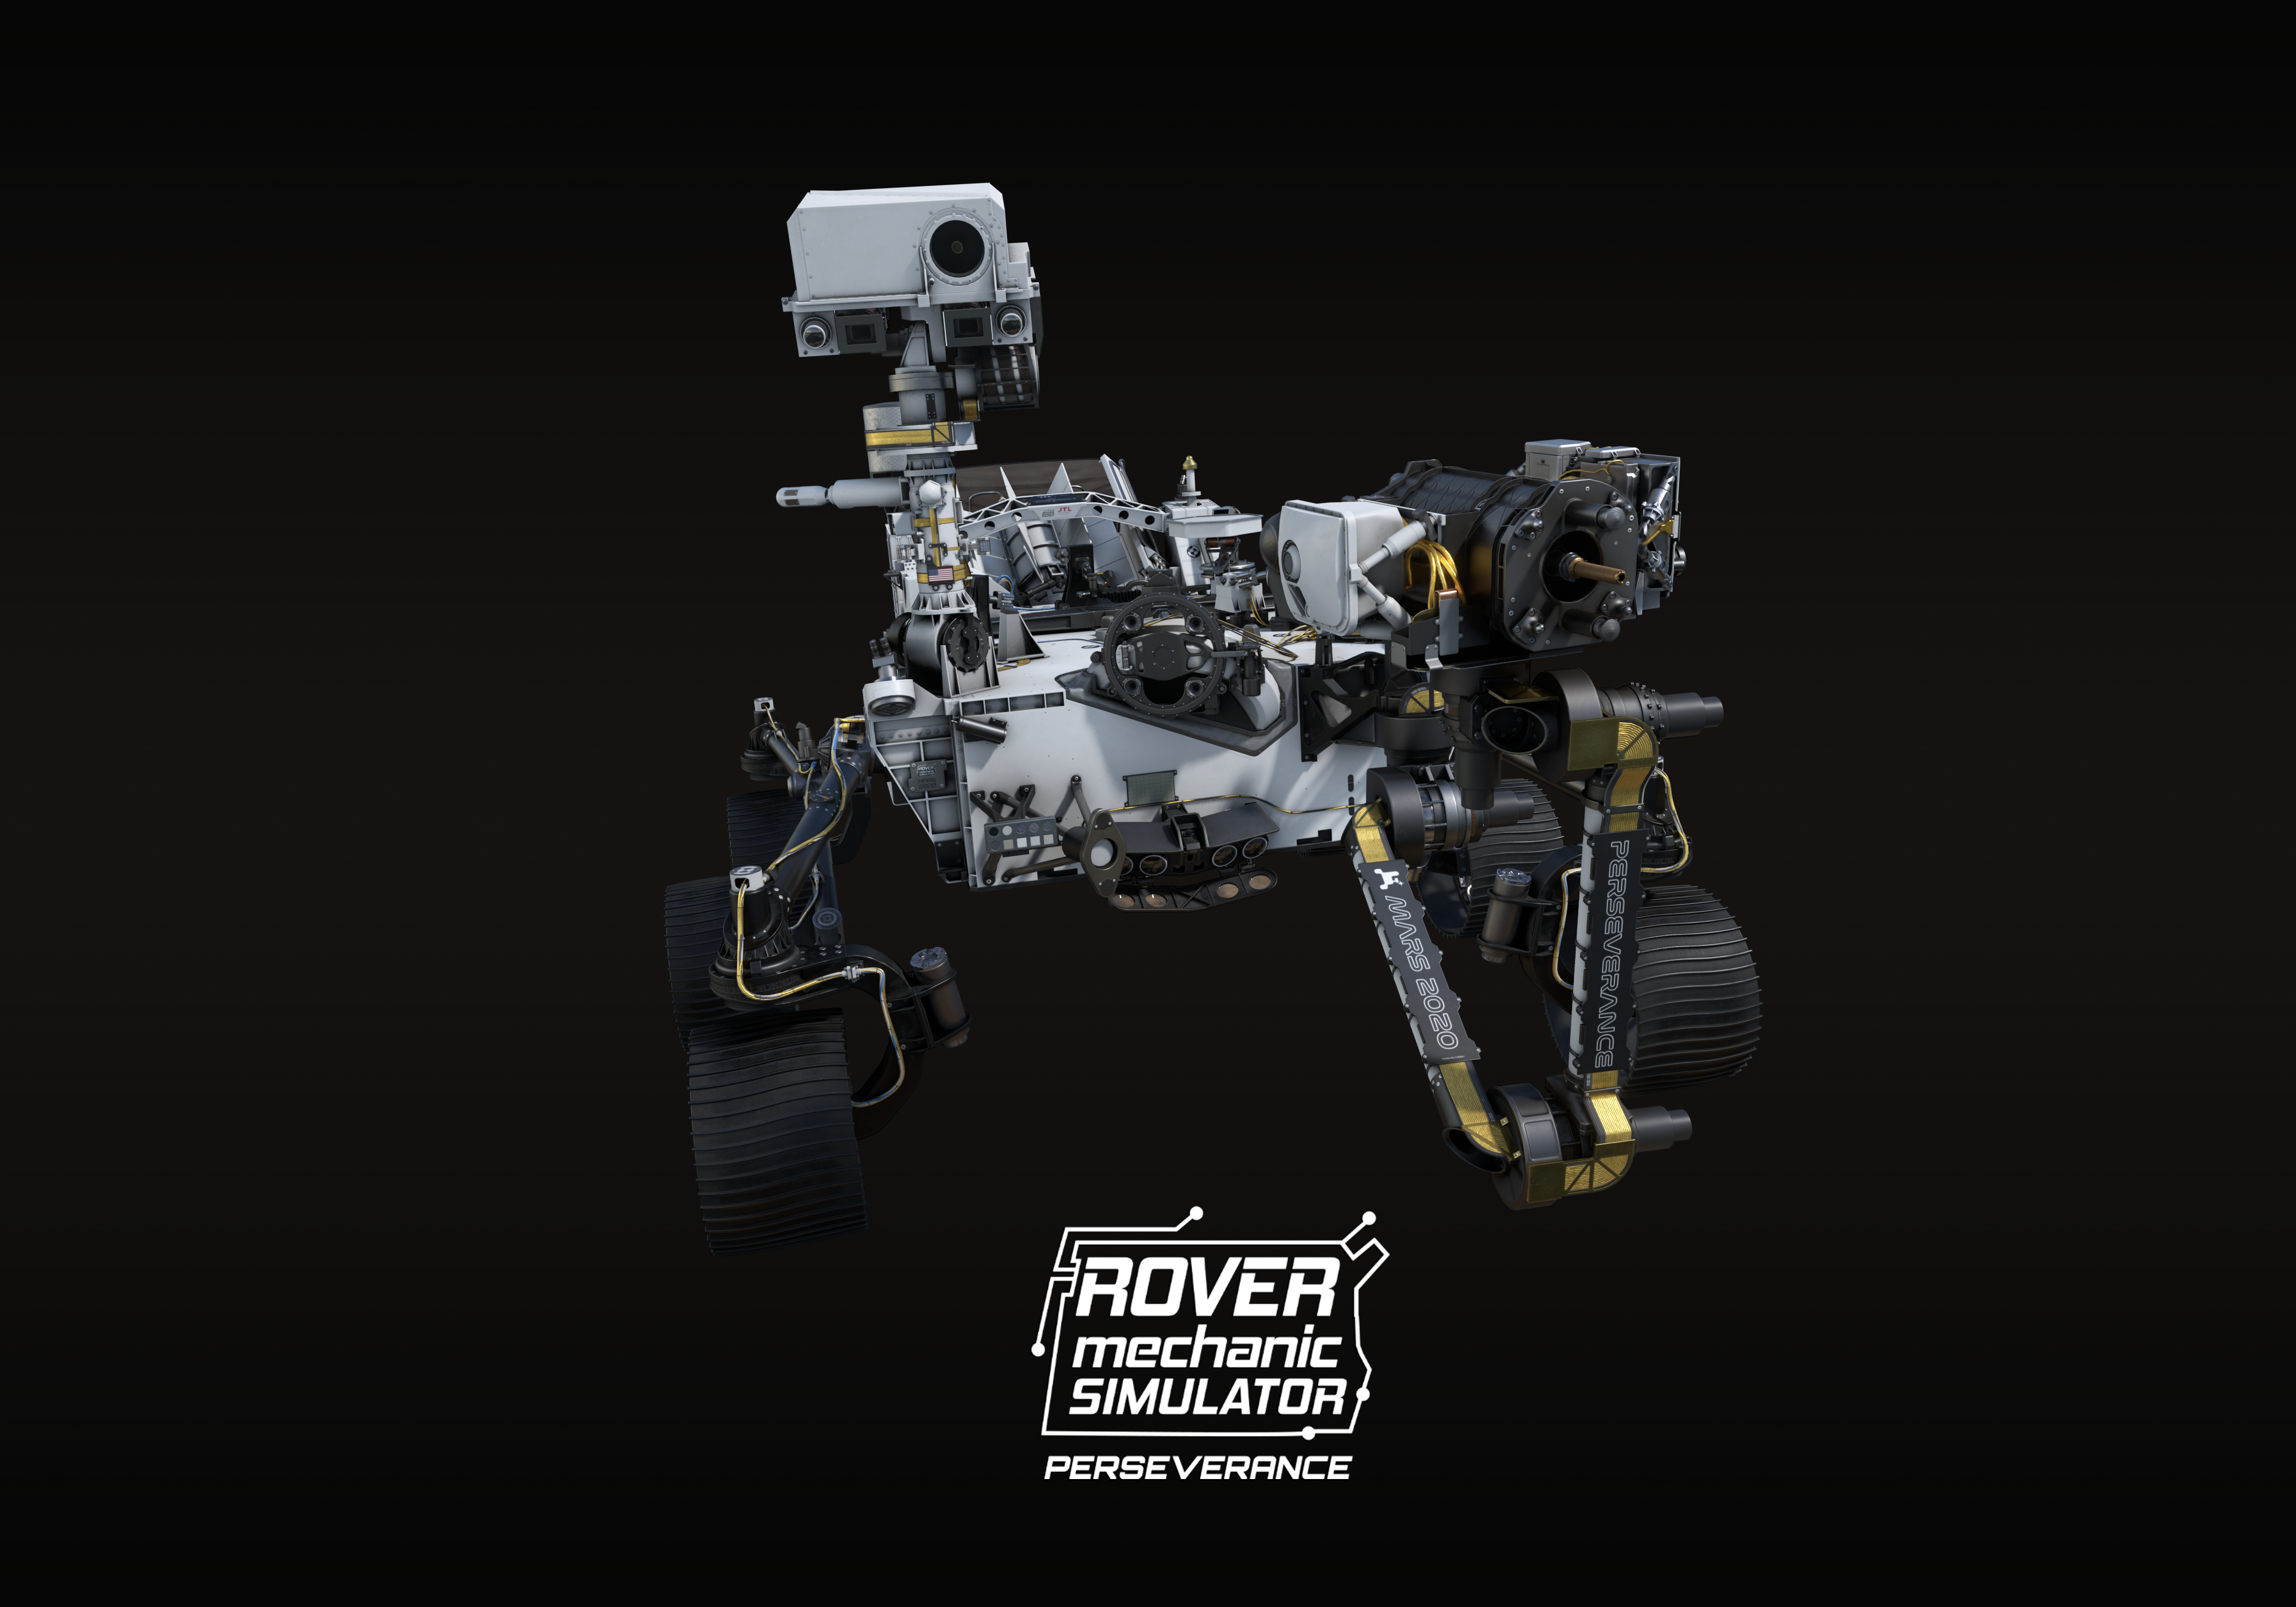 Perseverance Mars Robot Mars Rover Rover Robot NASA JPL Jet Propulsion Laboratory Video Game Art 3840x2688